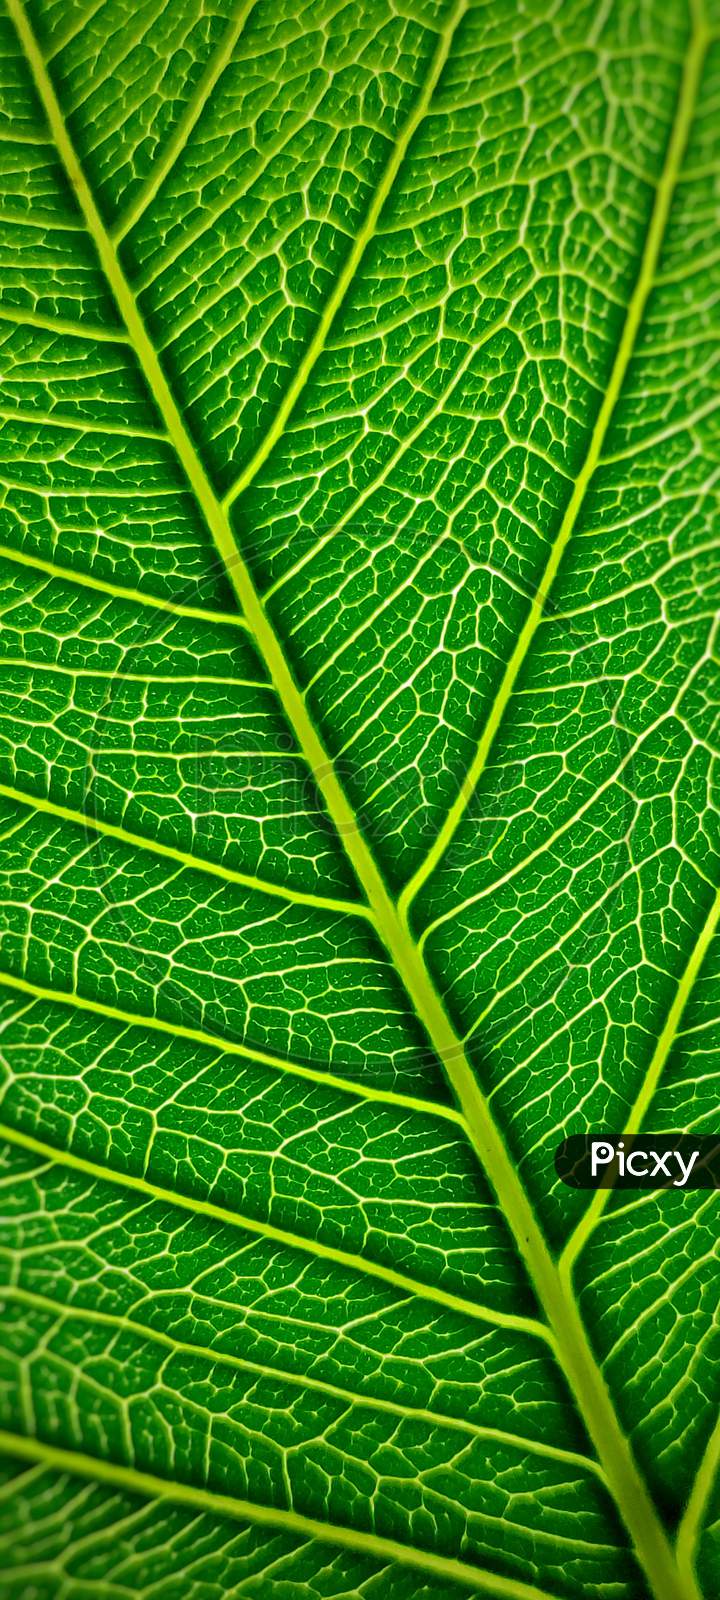 Leaf close up, macro photography of leaf